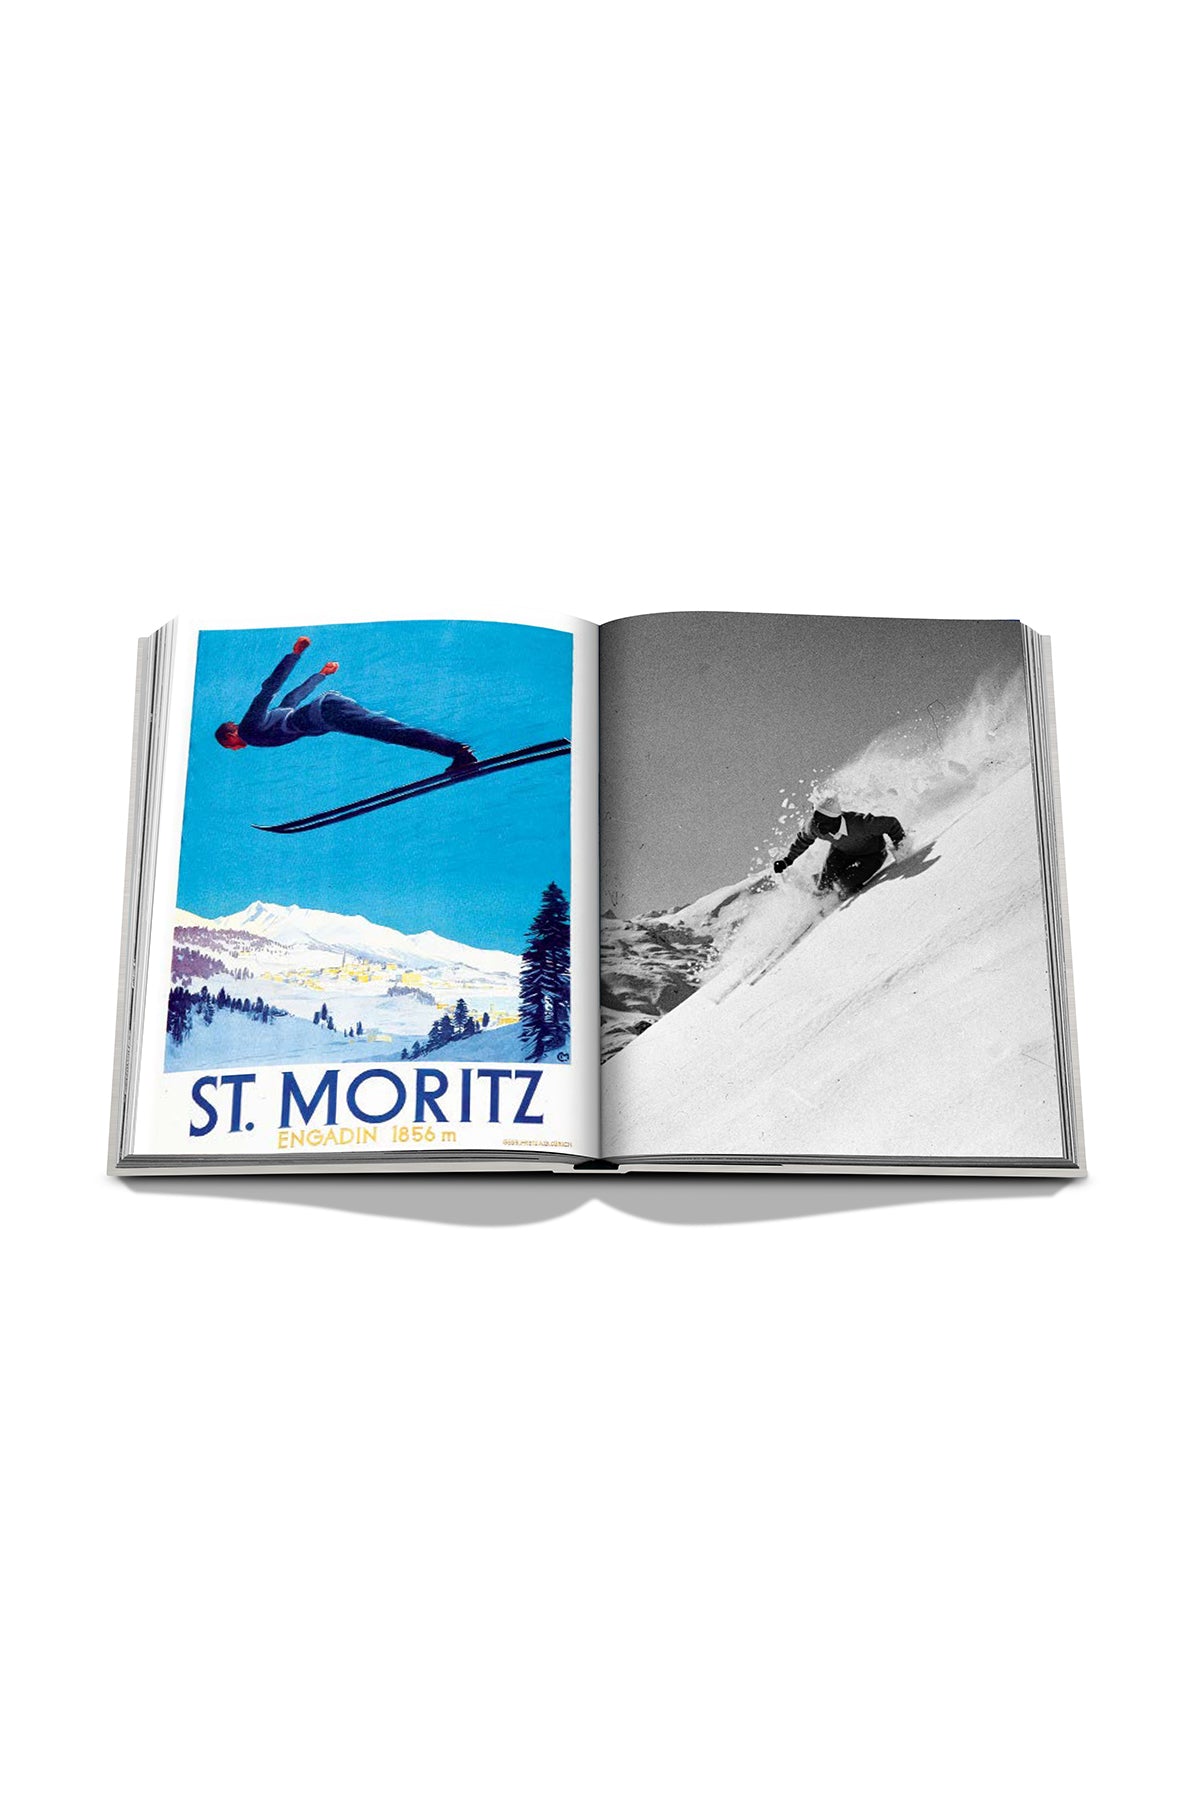 ASSOULINE | ST. MORITZ CHIC